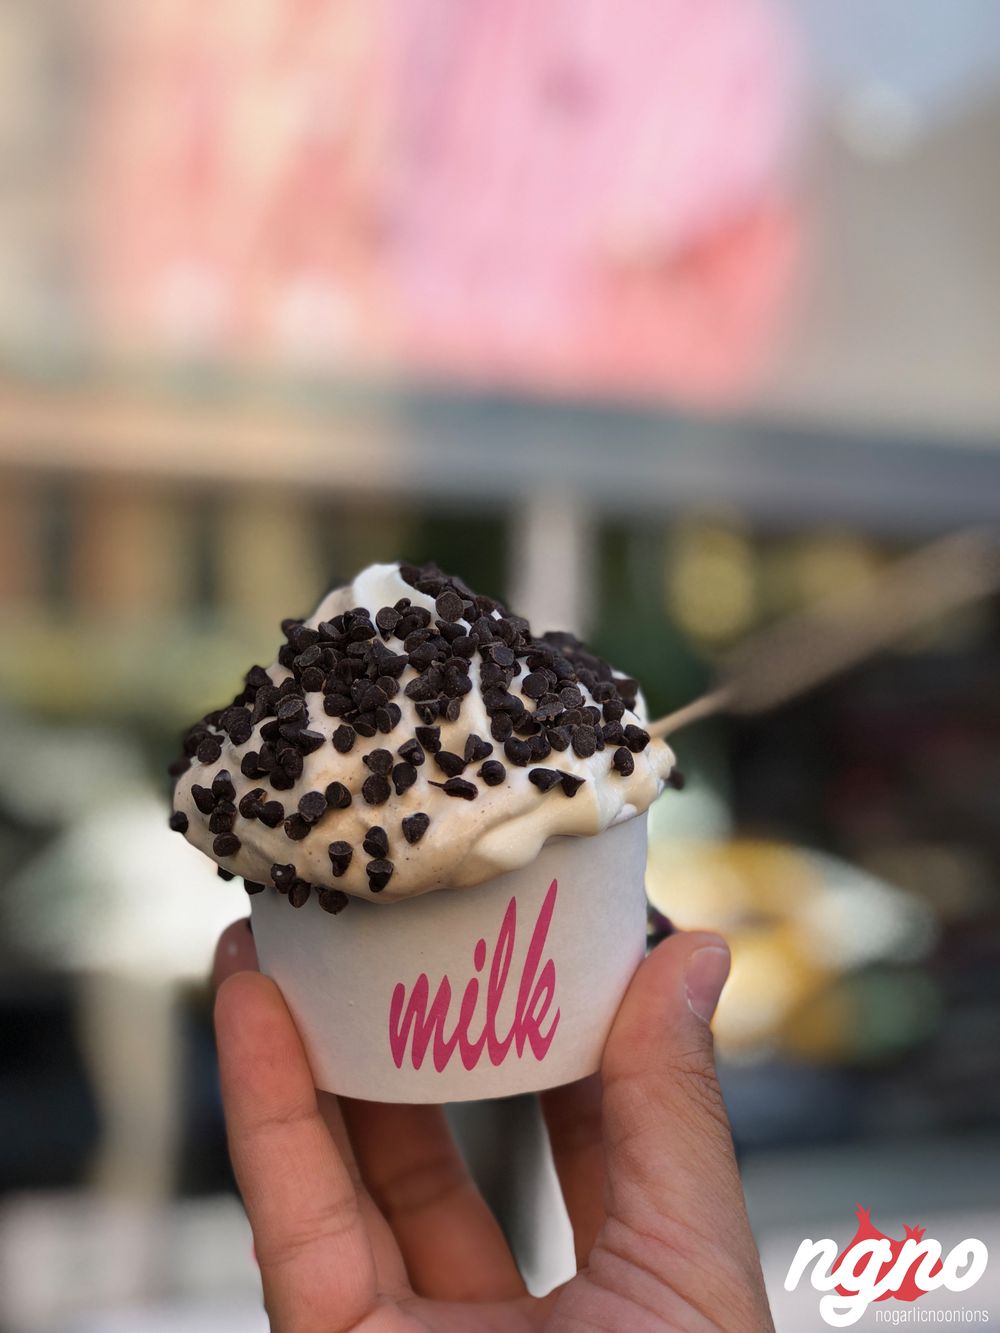 milk-ice-cream-soft-serve-new-york32017-10-25-09-39-14